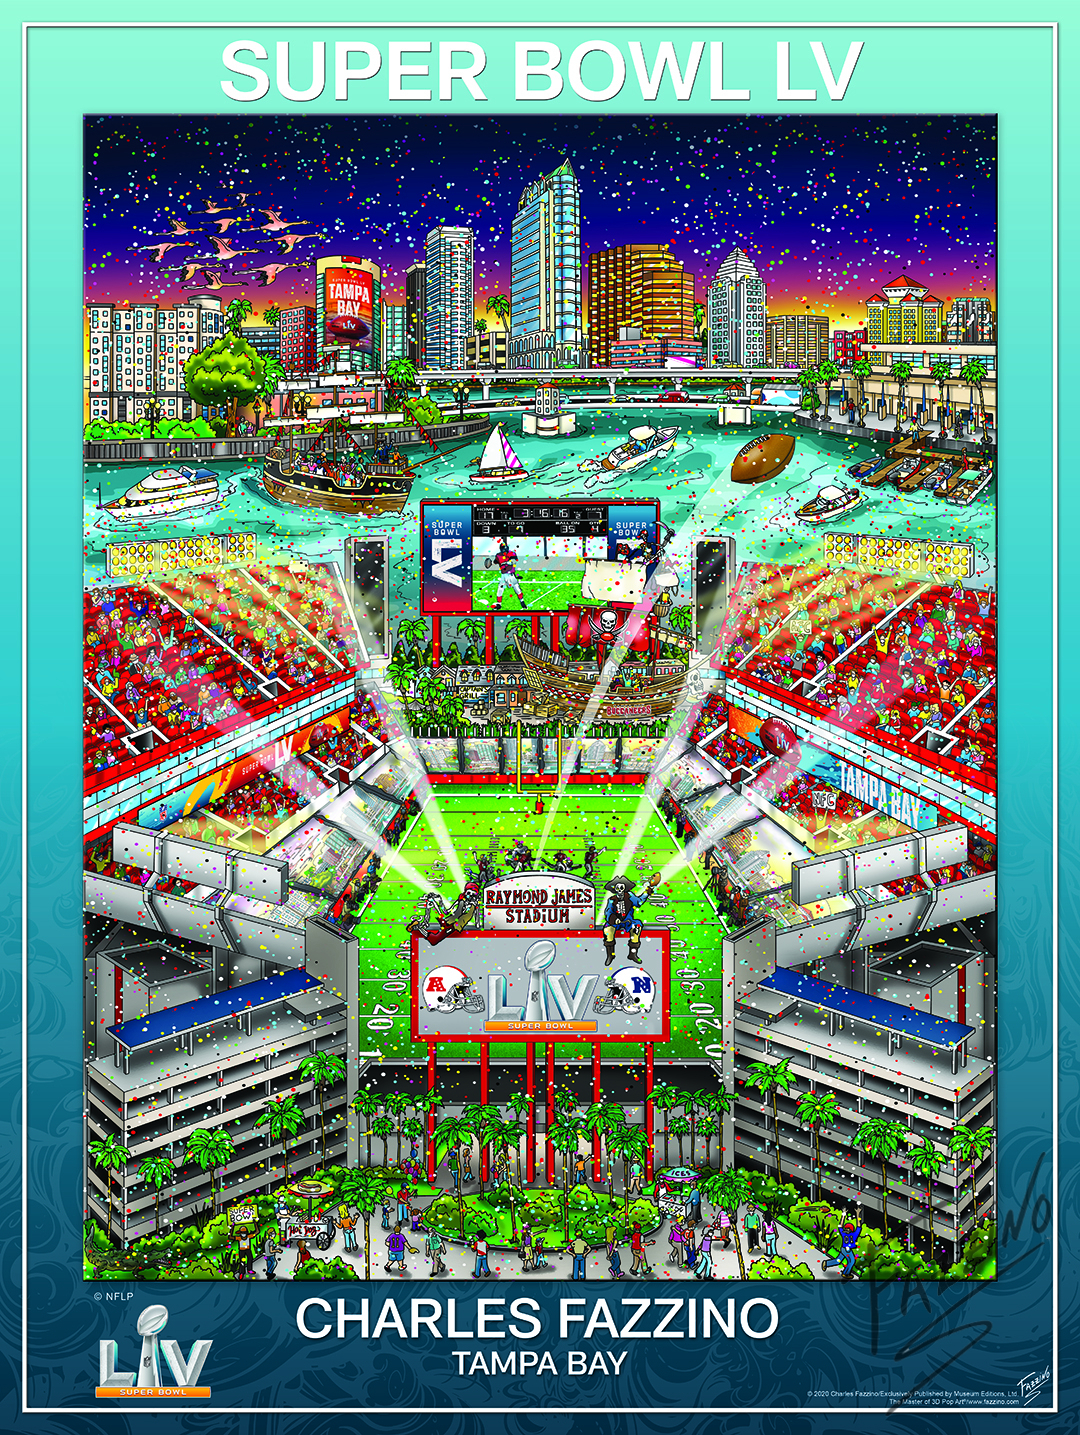 Fazzino's Super Bowl LV poster of Raymond James Stadium in Tampa, FL